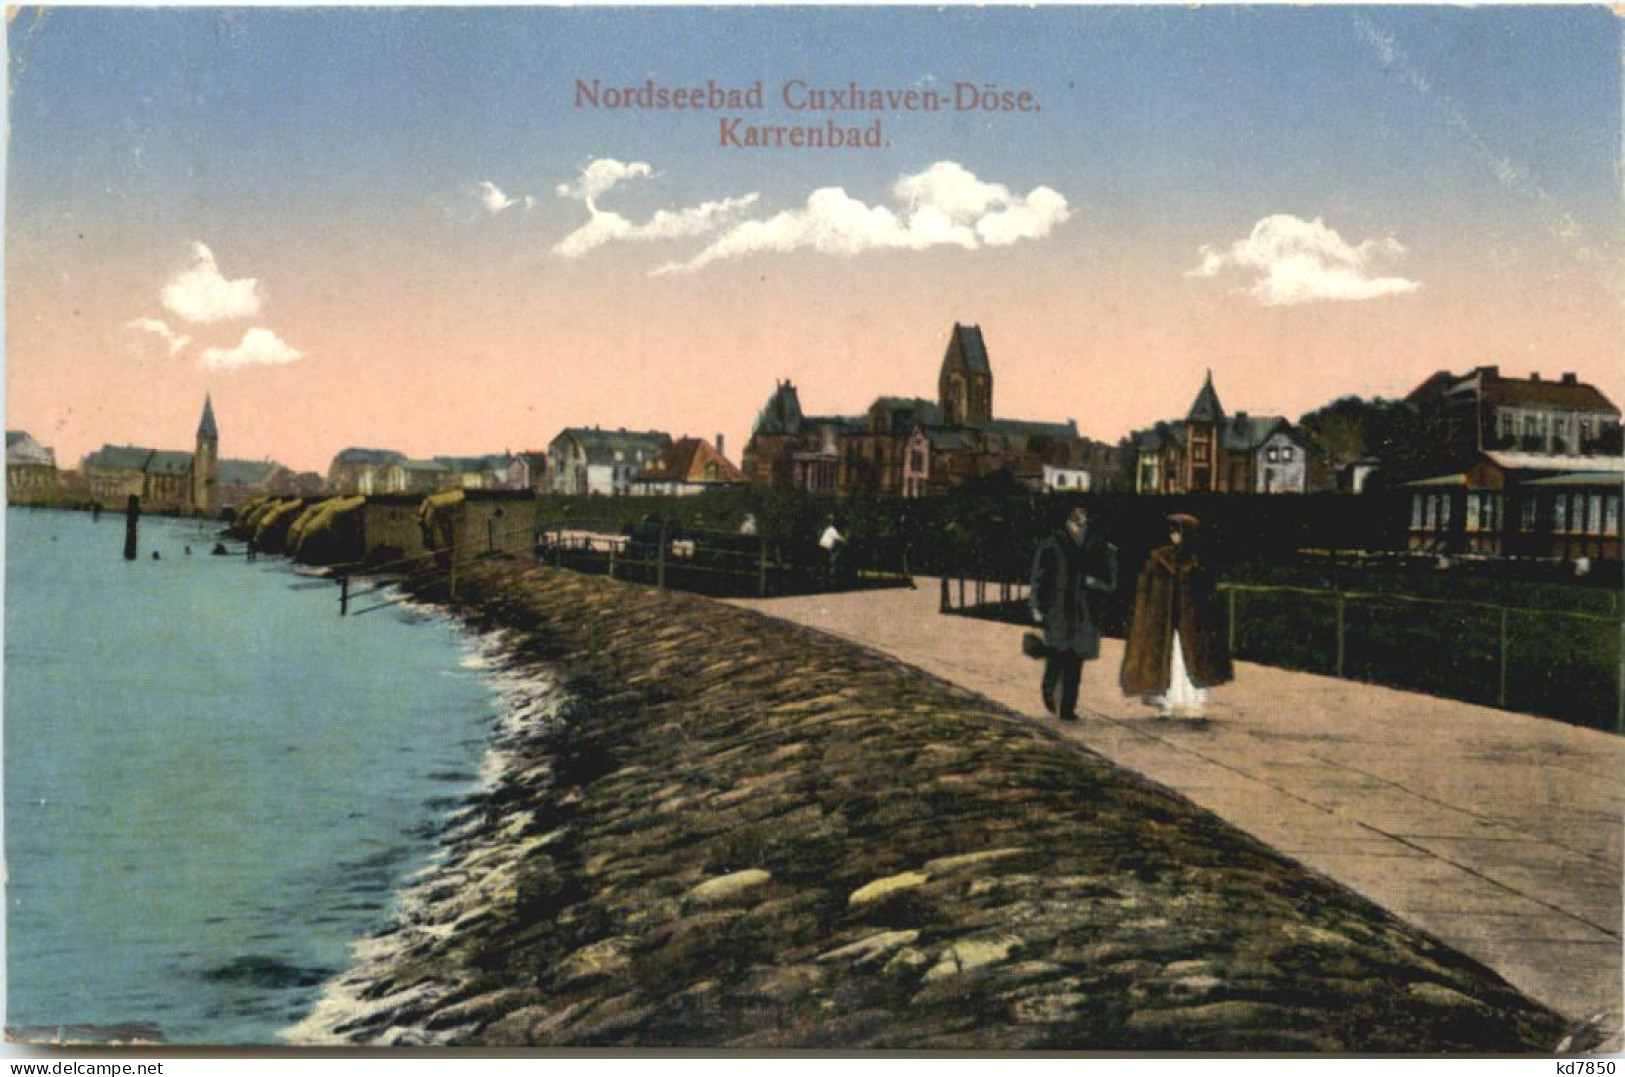 Nordseebad Cuxhaven-Döse - Karrenbad - Cuxhaven